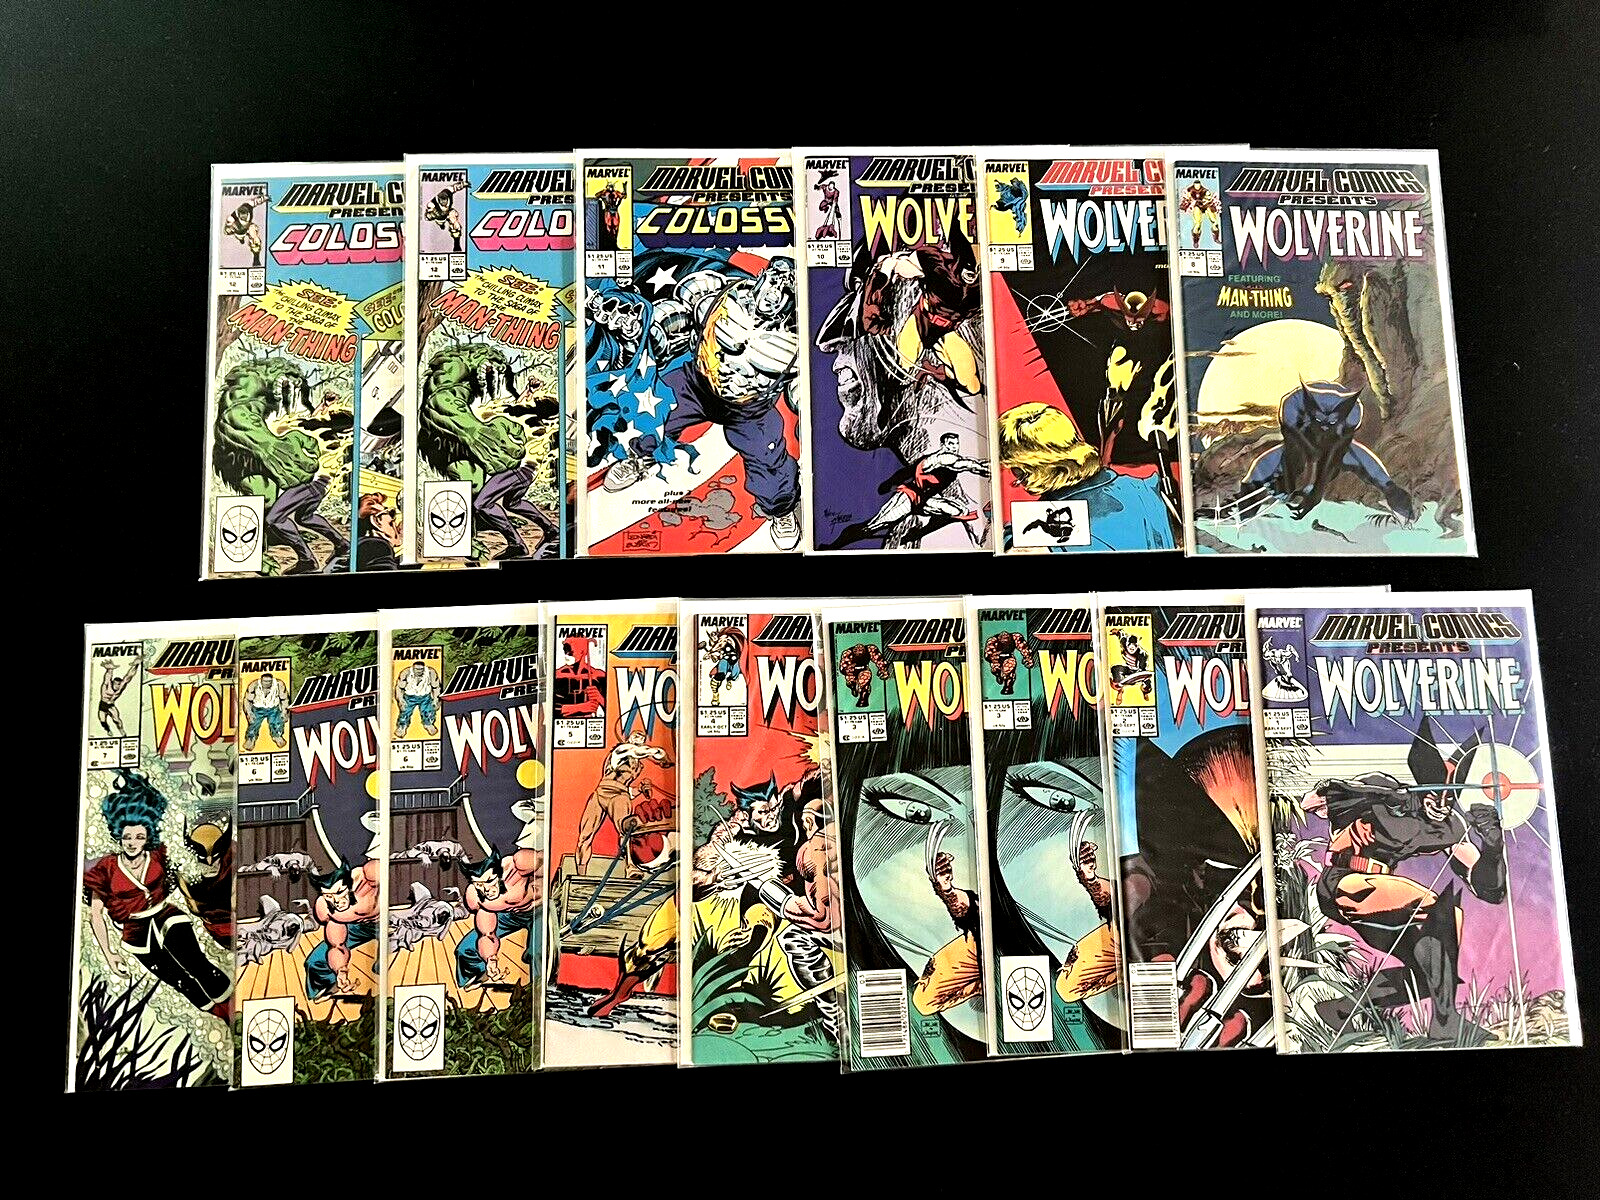 Marvel Comics Presents Wolverine Colossus Lot of 15 Comics #1-12 Complete Run